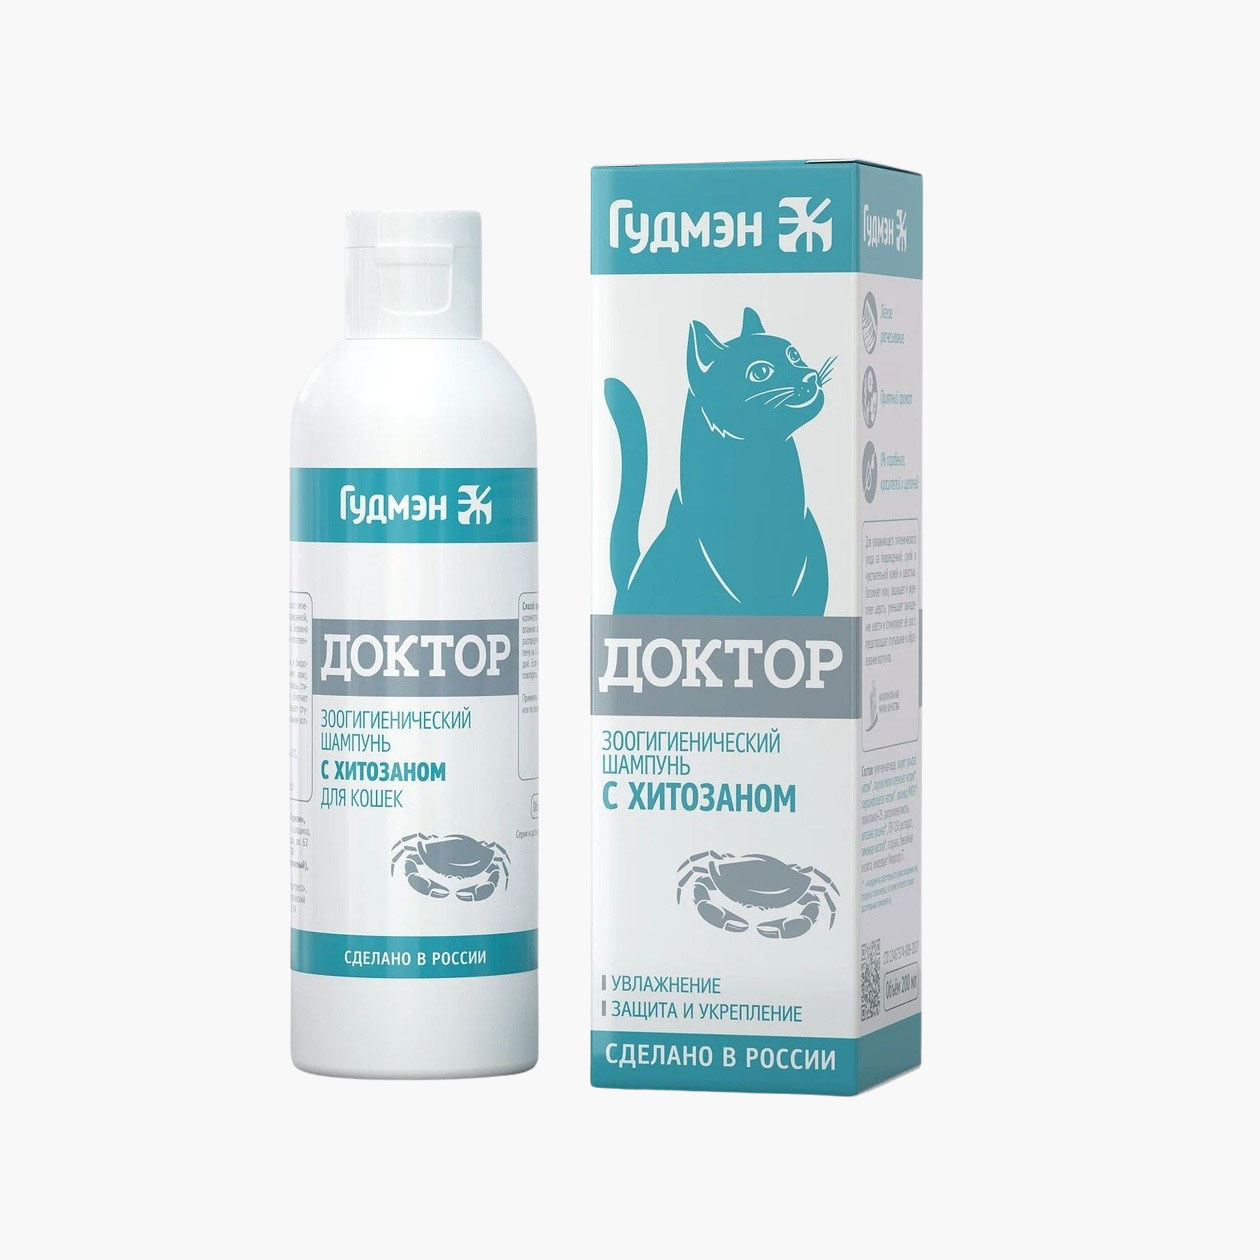 Увлажняющий кошачий шампунь российского производства. Цена: 518 ₽